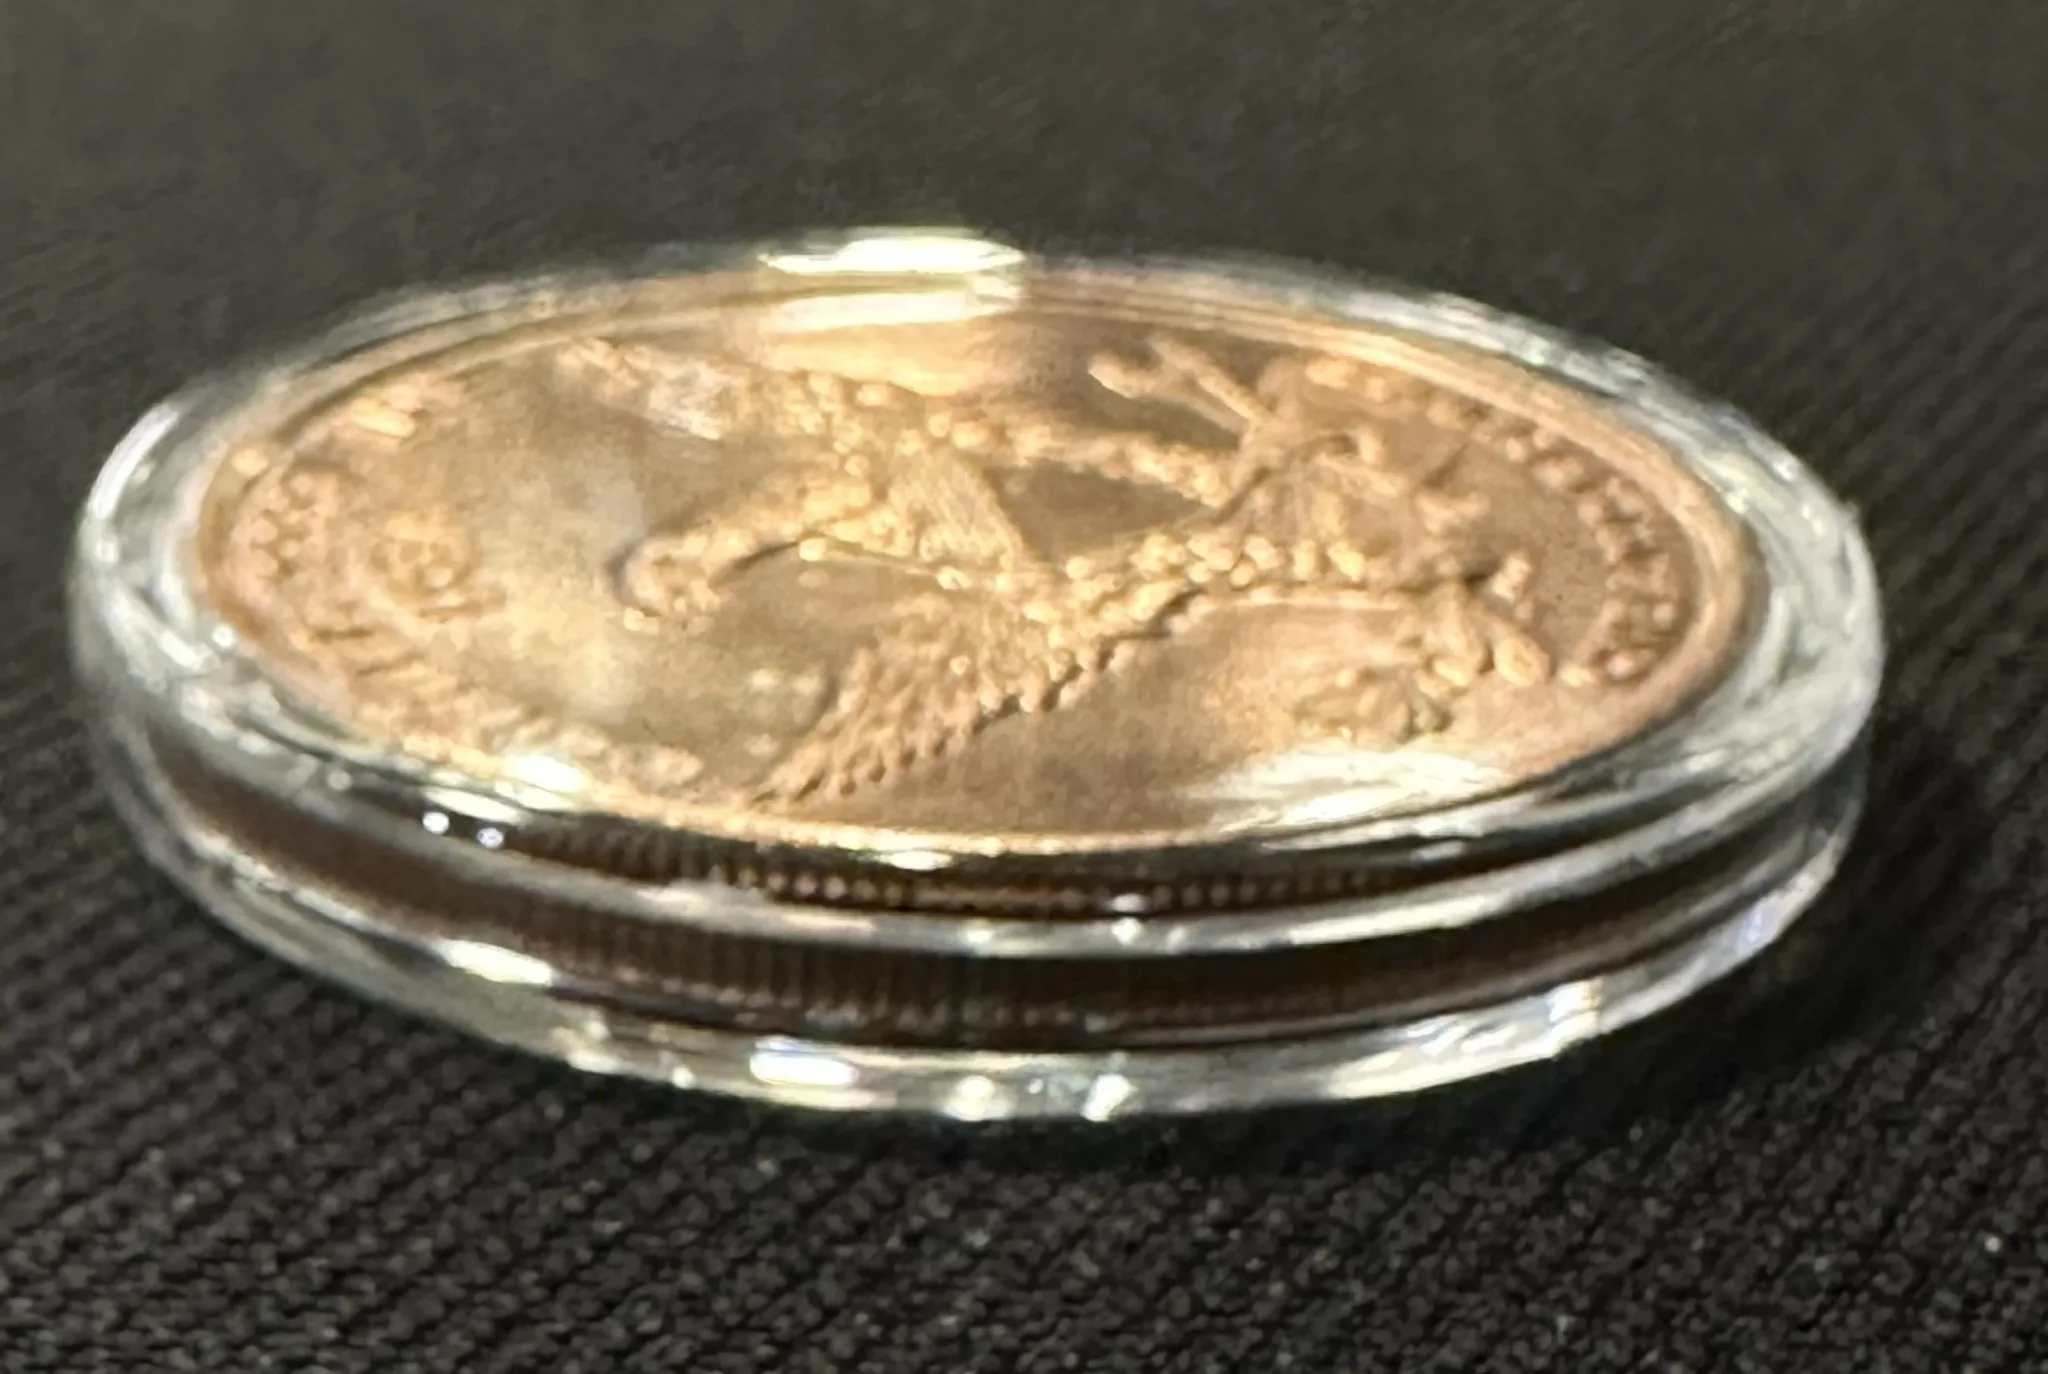 Trex copper coin, 1oz Prehistoric Online